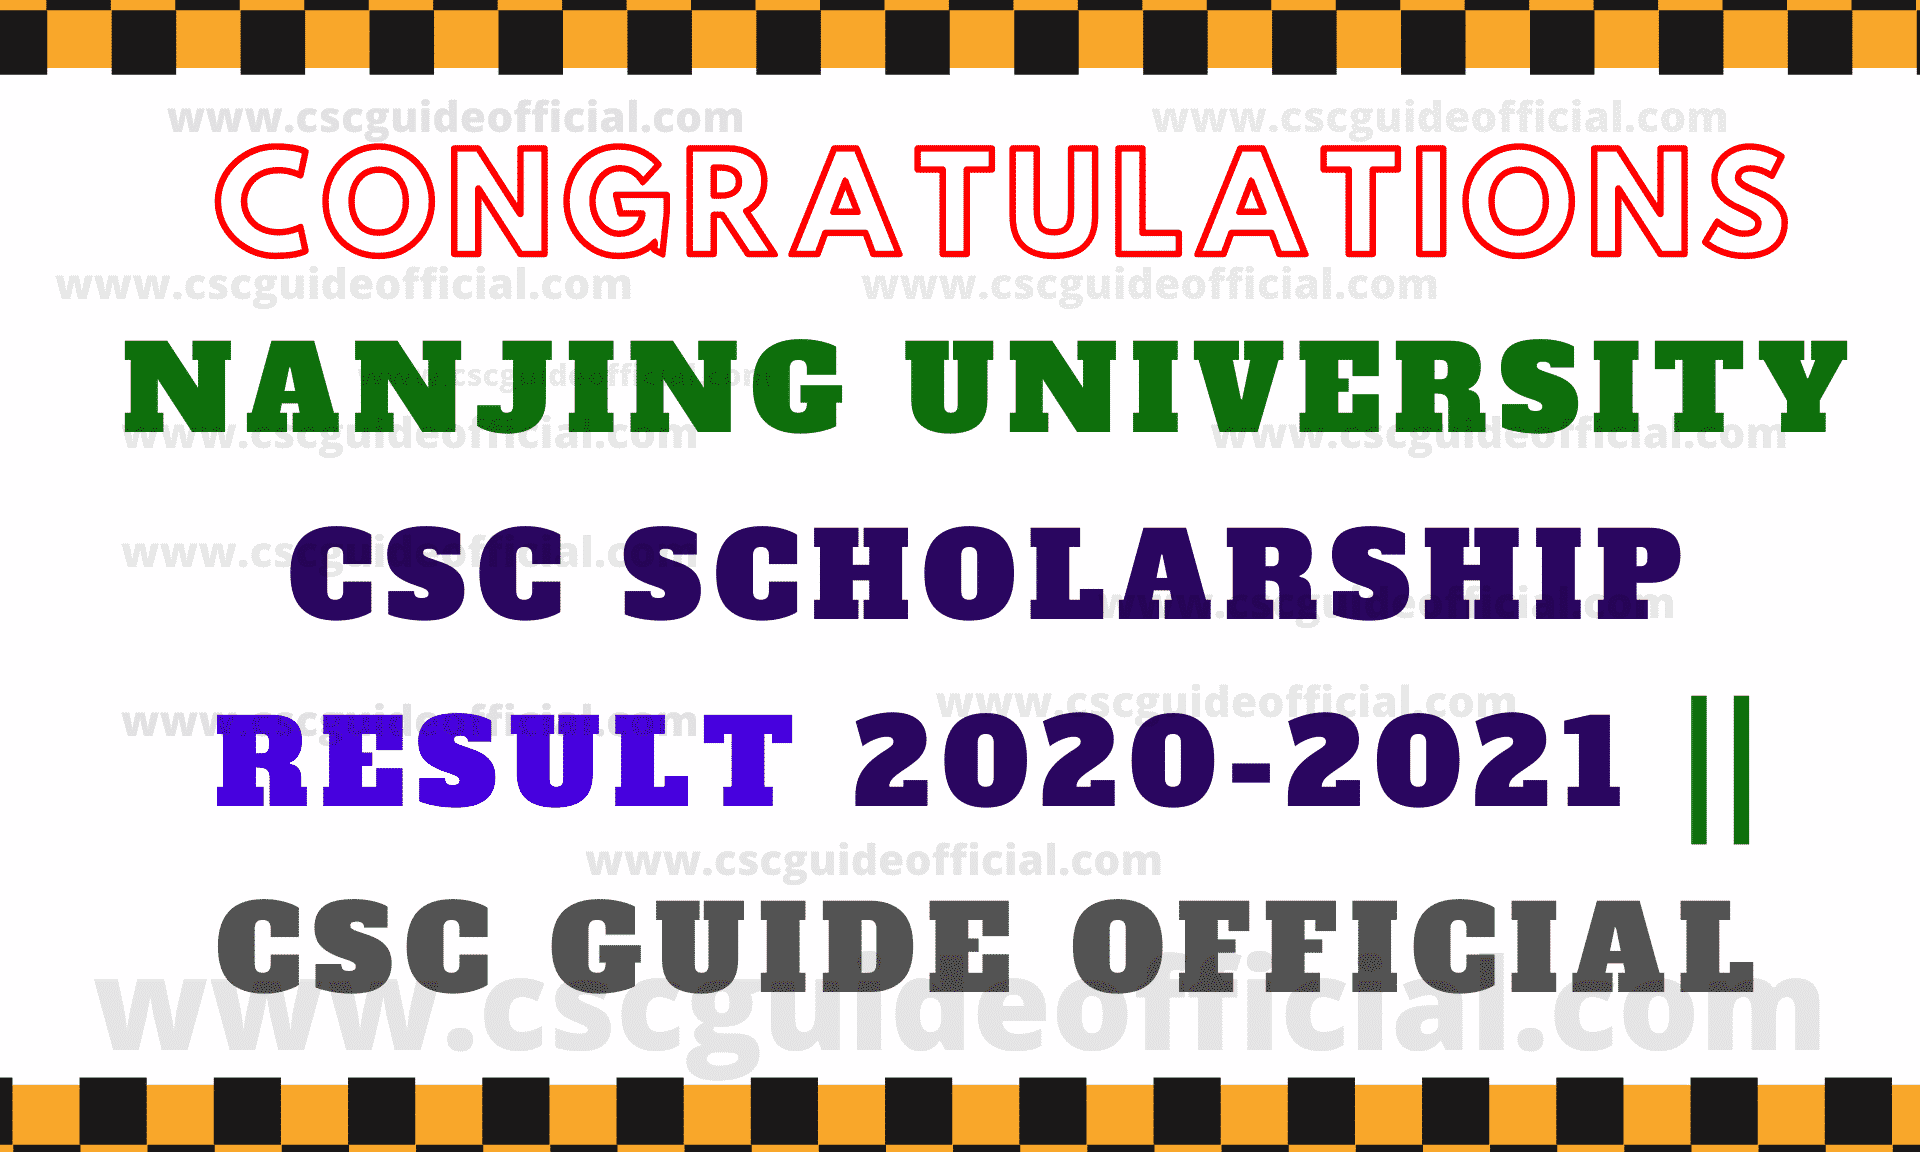 nanjing university csc scholarship result 2020